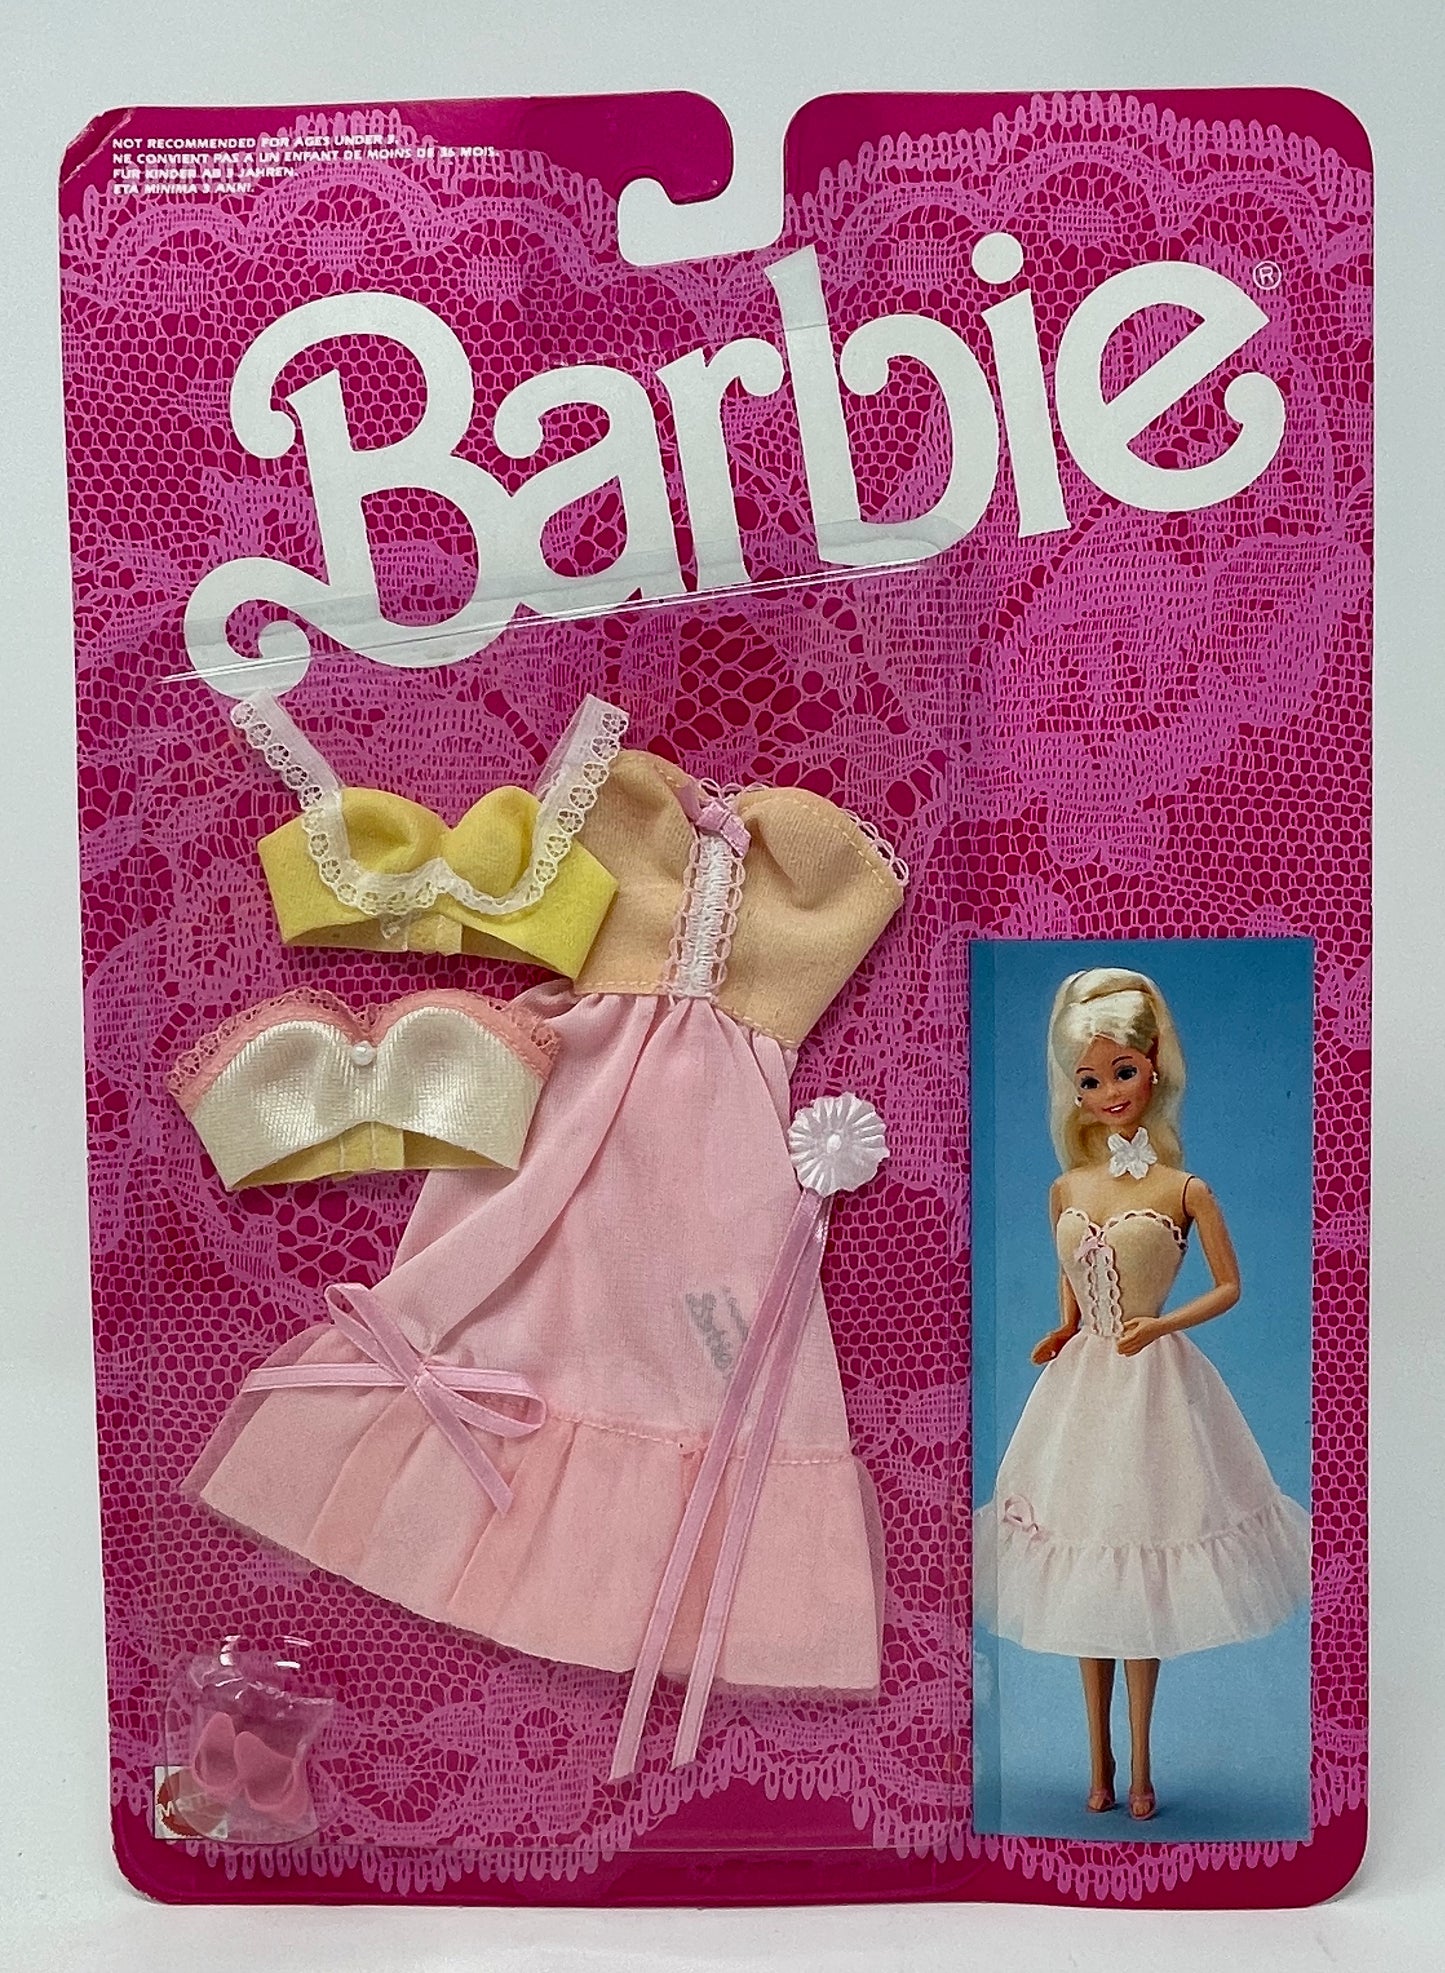 BARBIE - FANCY FRILLS LINGERIE - PINK/YELLOW DRESS/BRA TOPS/SANDALS #3184 - MATTEL 1986 (1 OF 2)